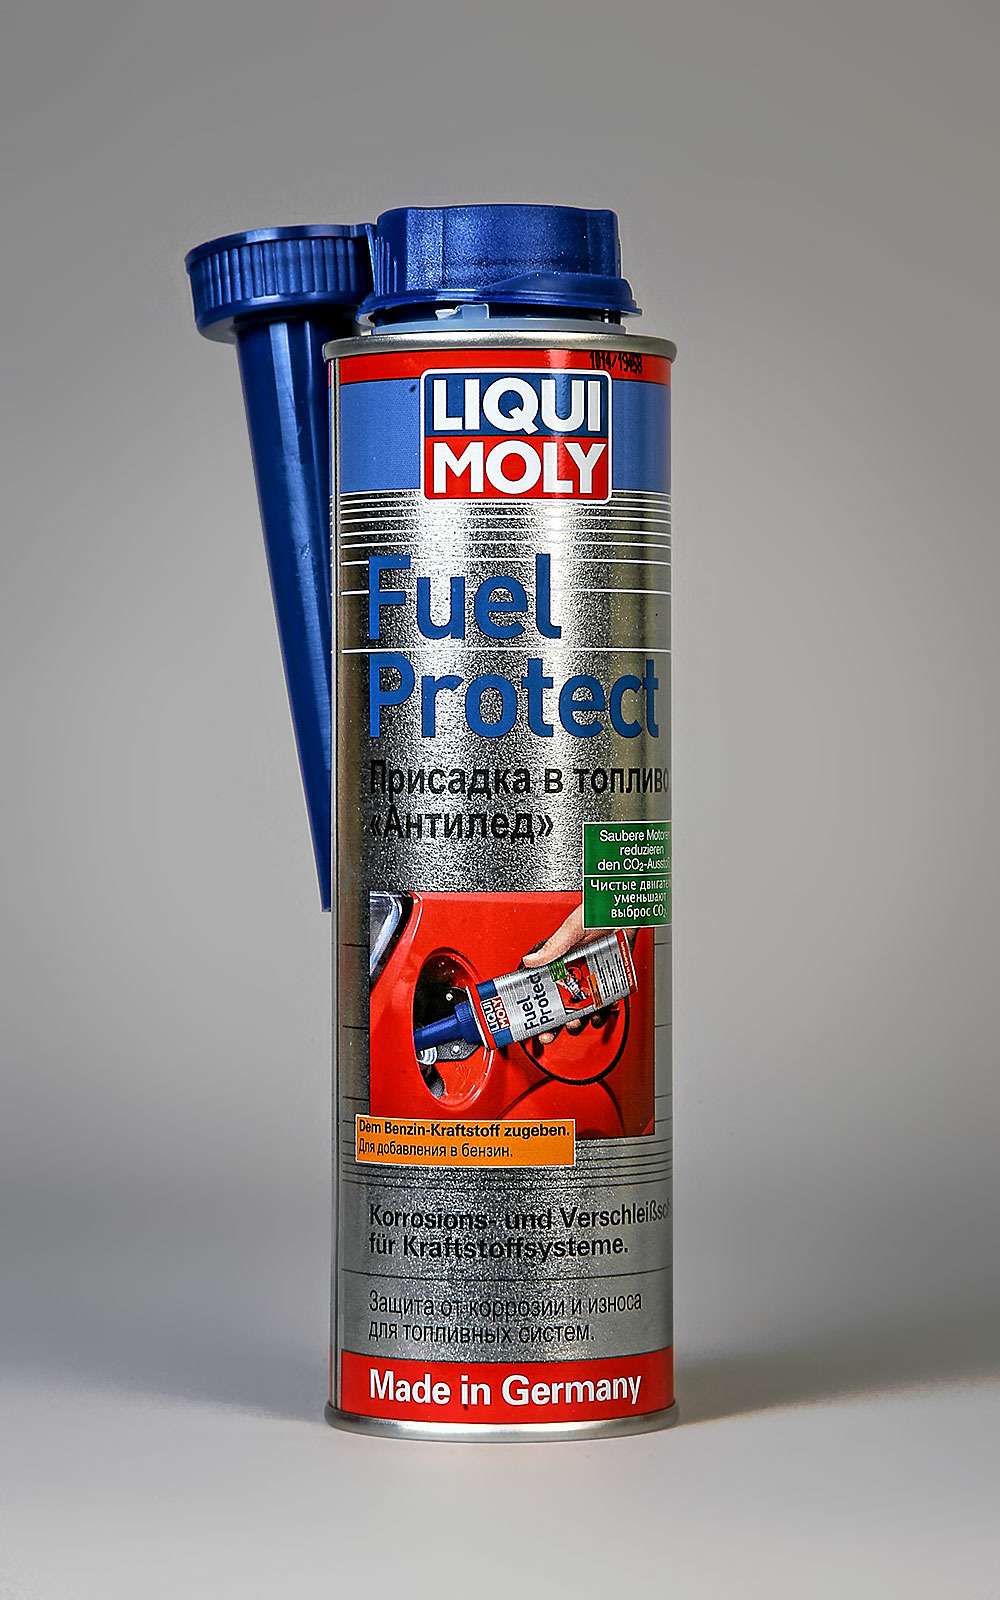 Liqui Moly Fuel Protect, Германия